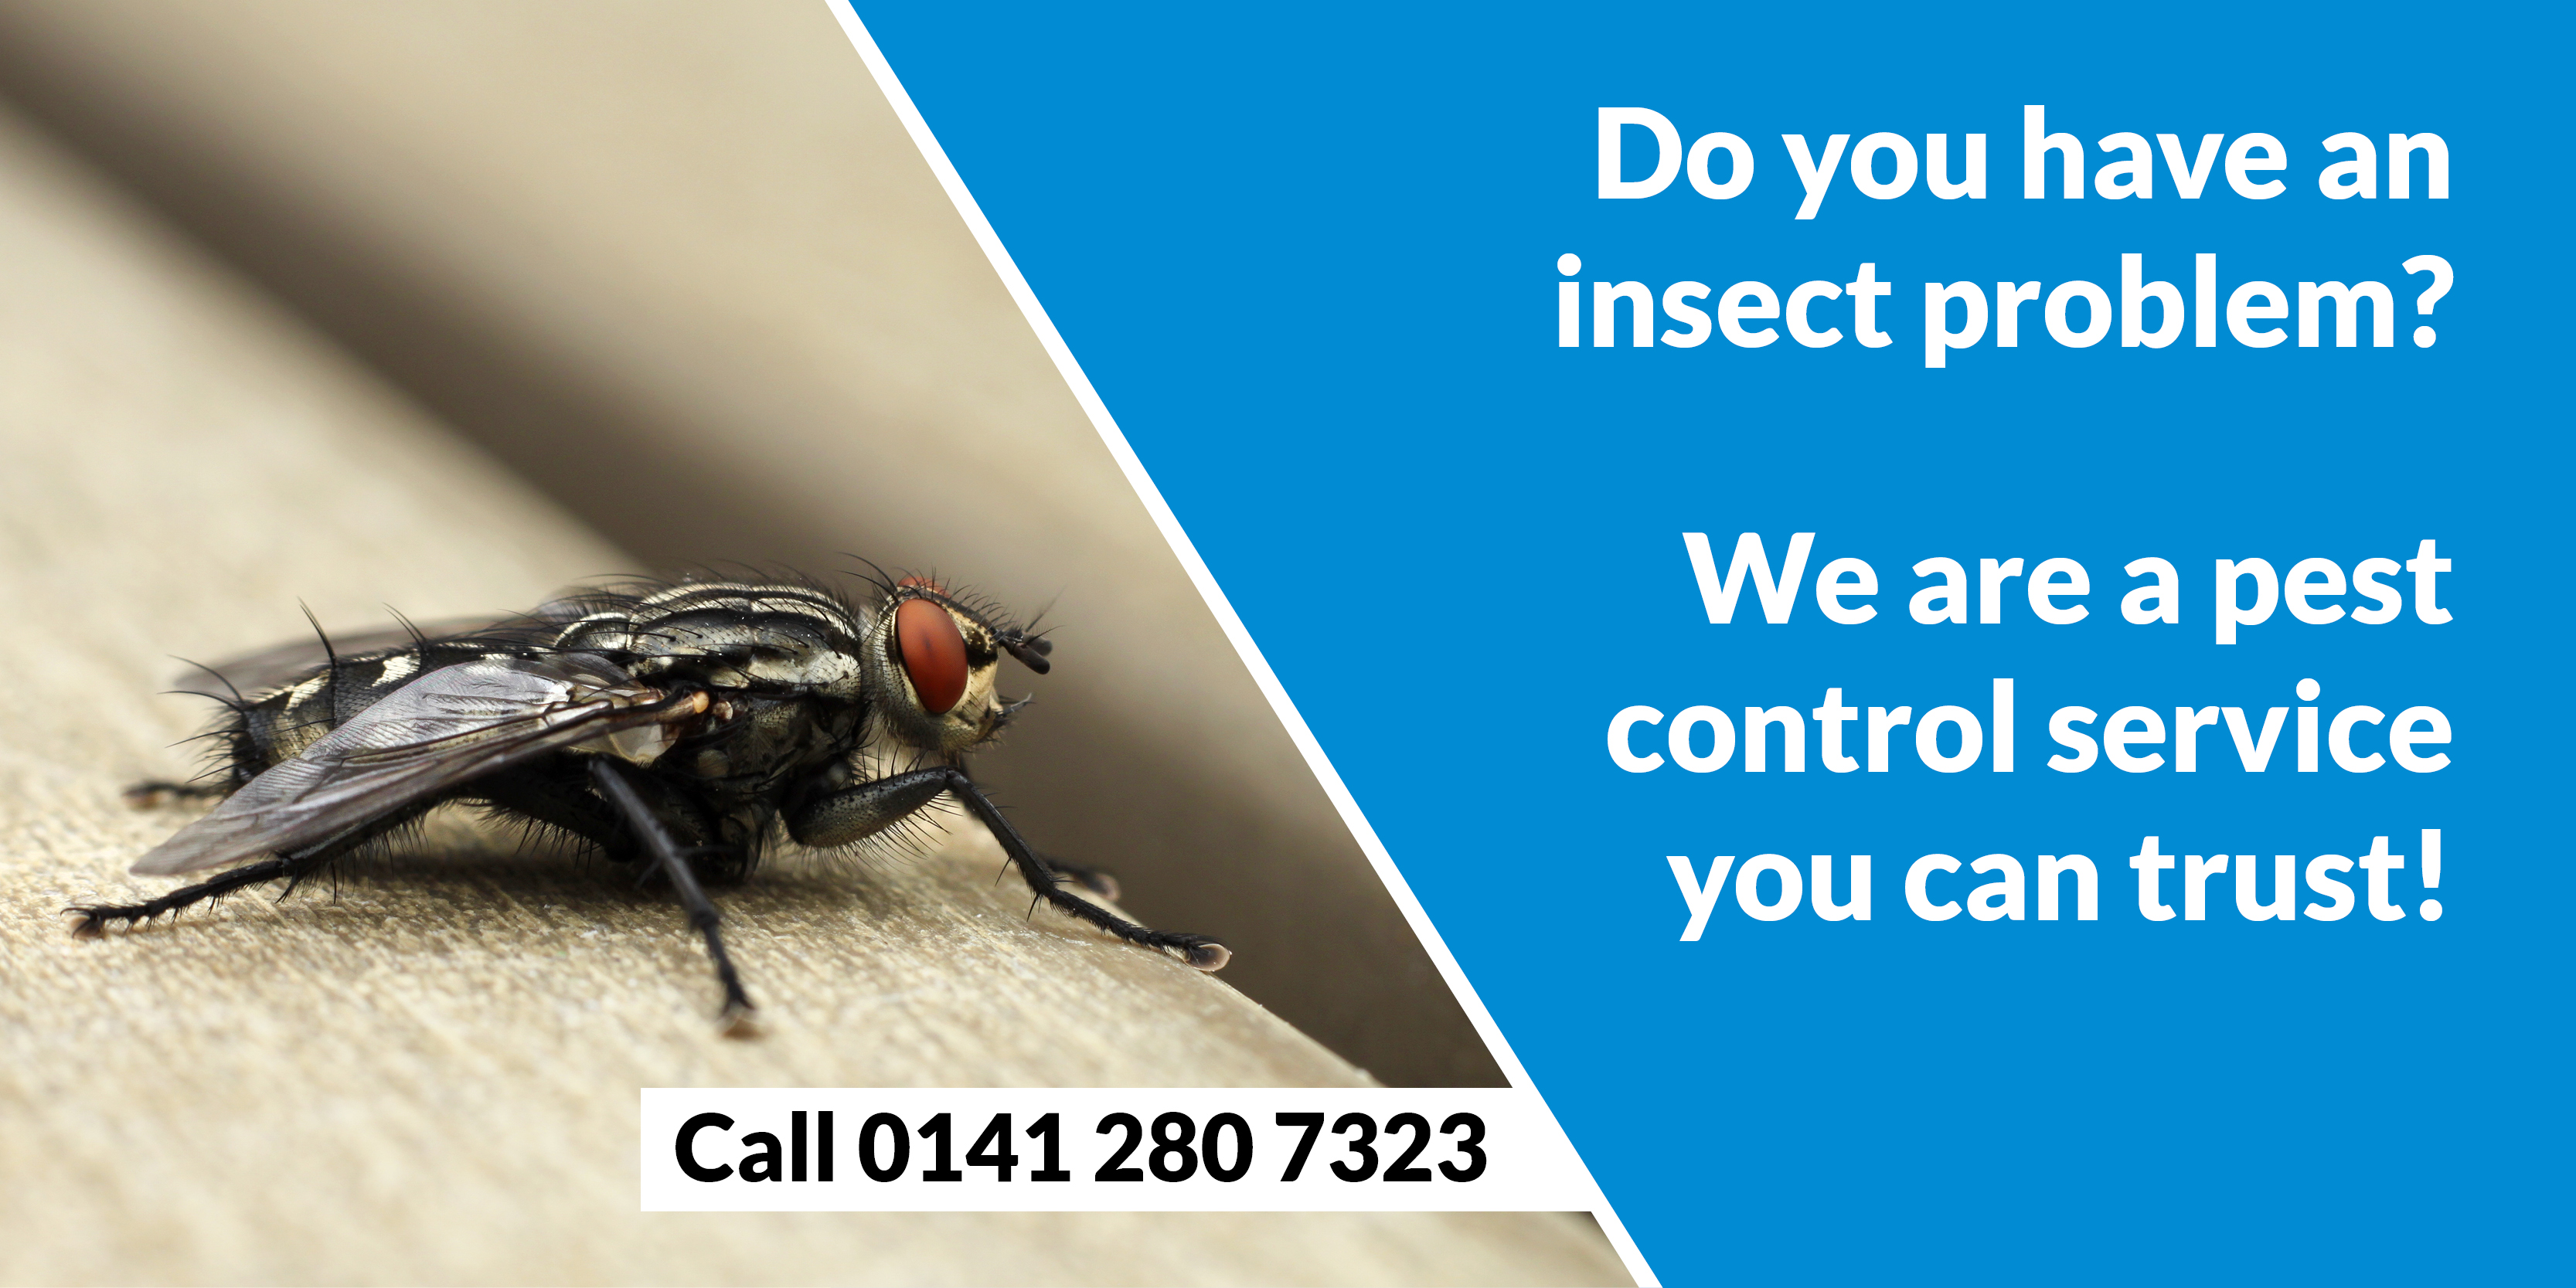 Pest Control Professionals Glasgow Pest Solutions - Pest Solutions